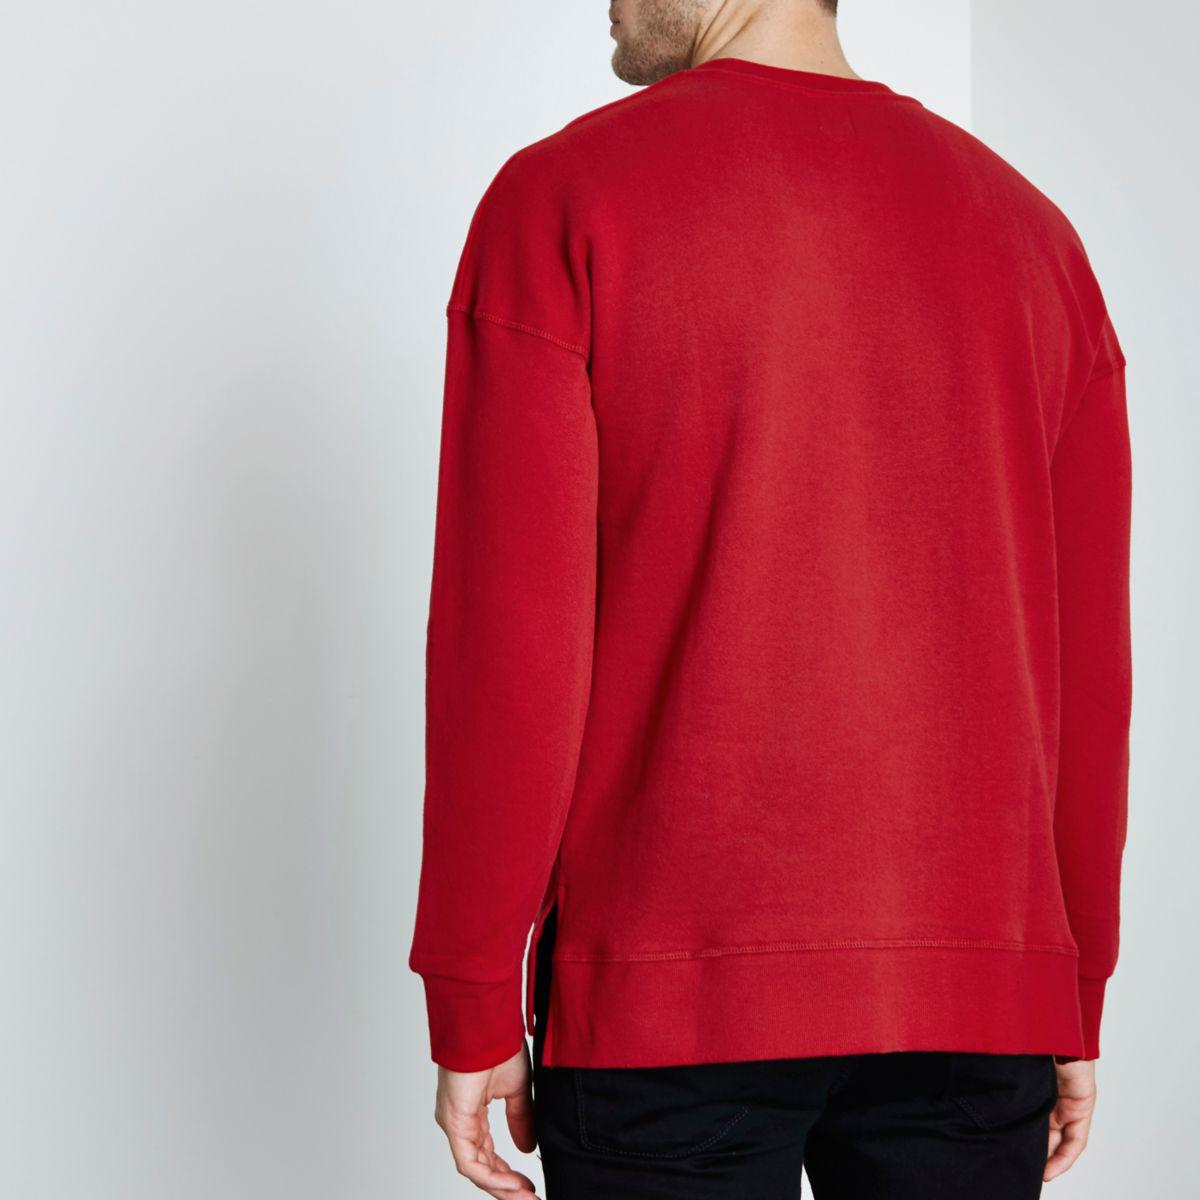 Lyst - River Island Red Crew Neck Sweatshirt in Red for Men